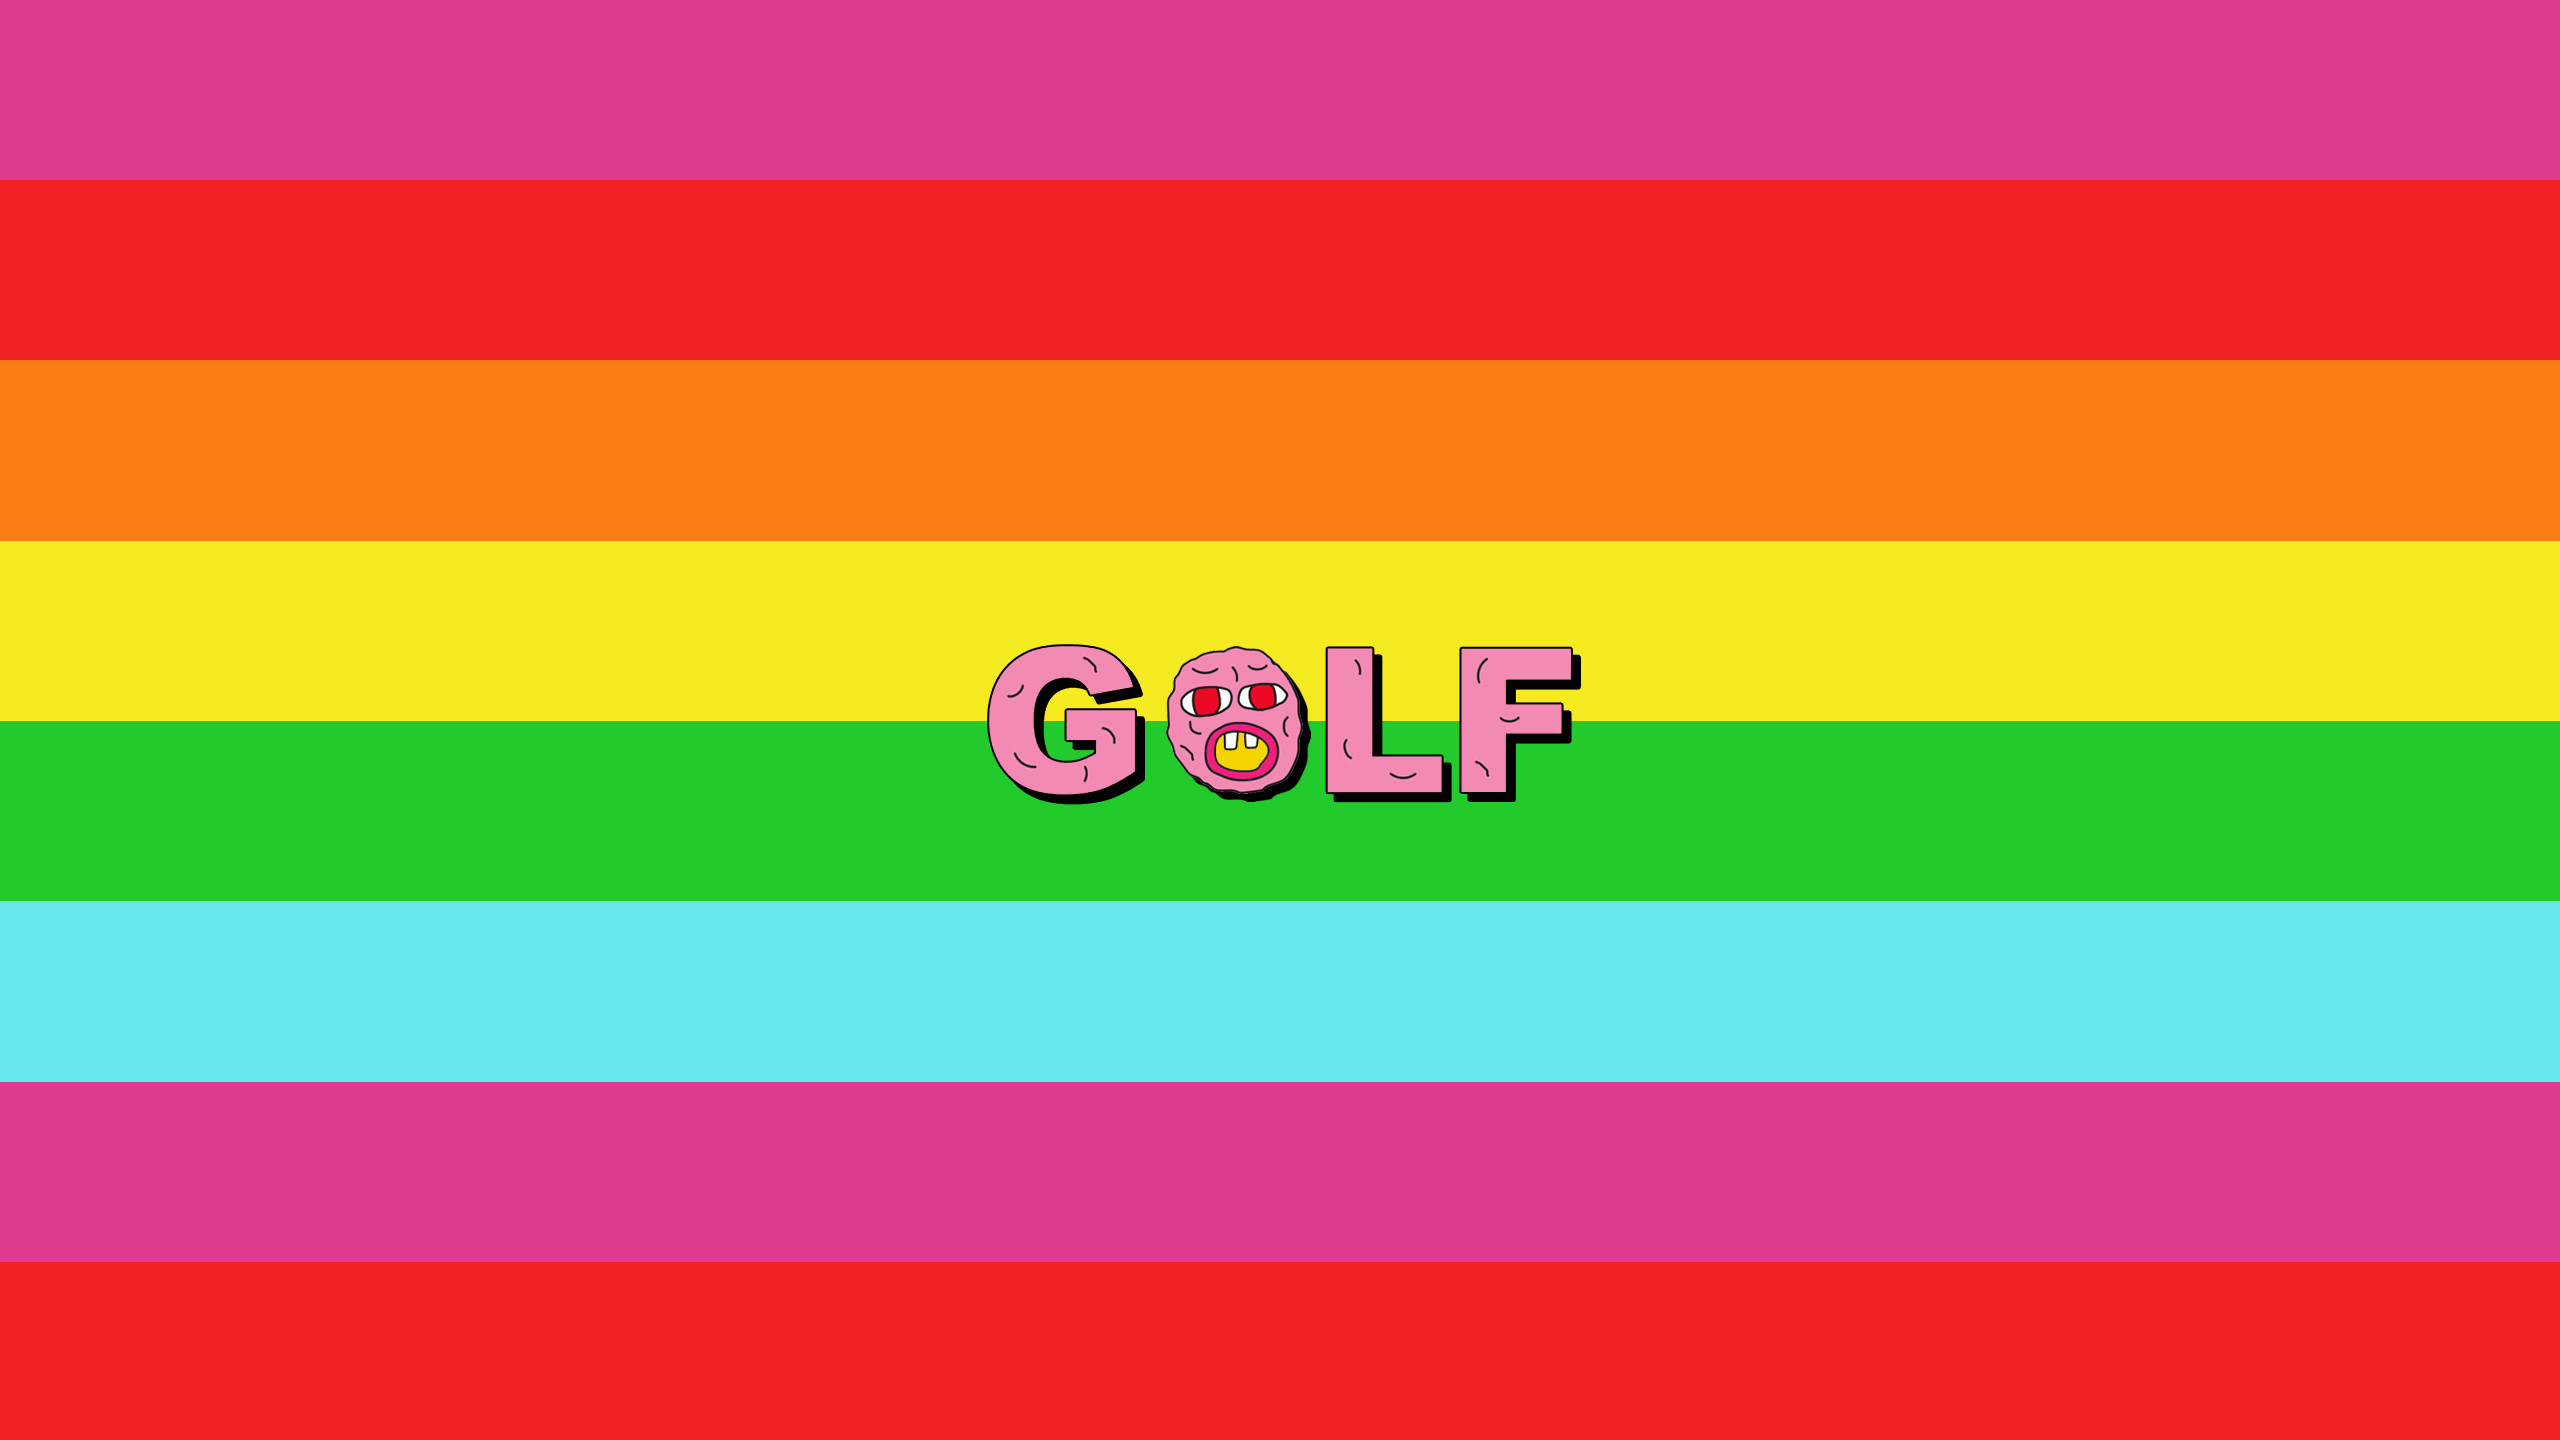 Golf Wang Wallpaper Hd Made some chery bomb themed desktop wallpapers